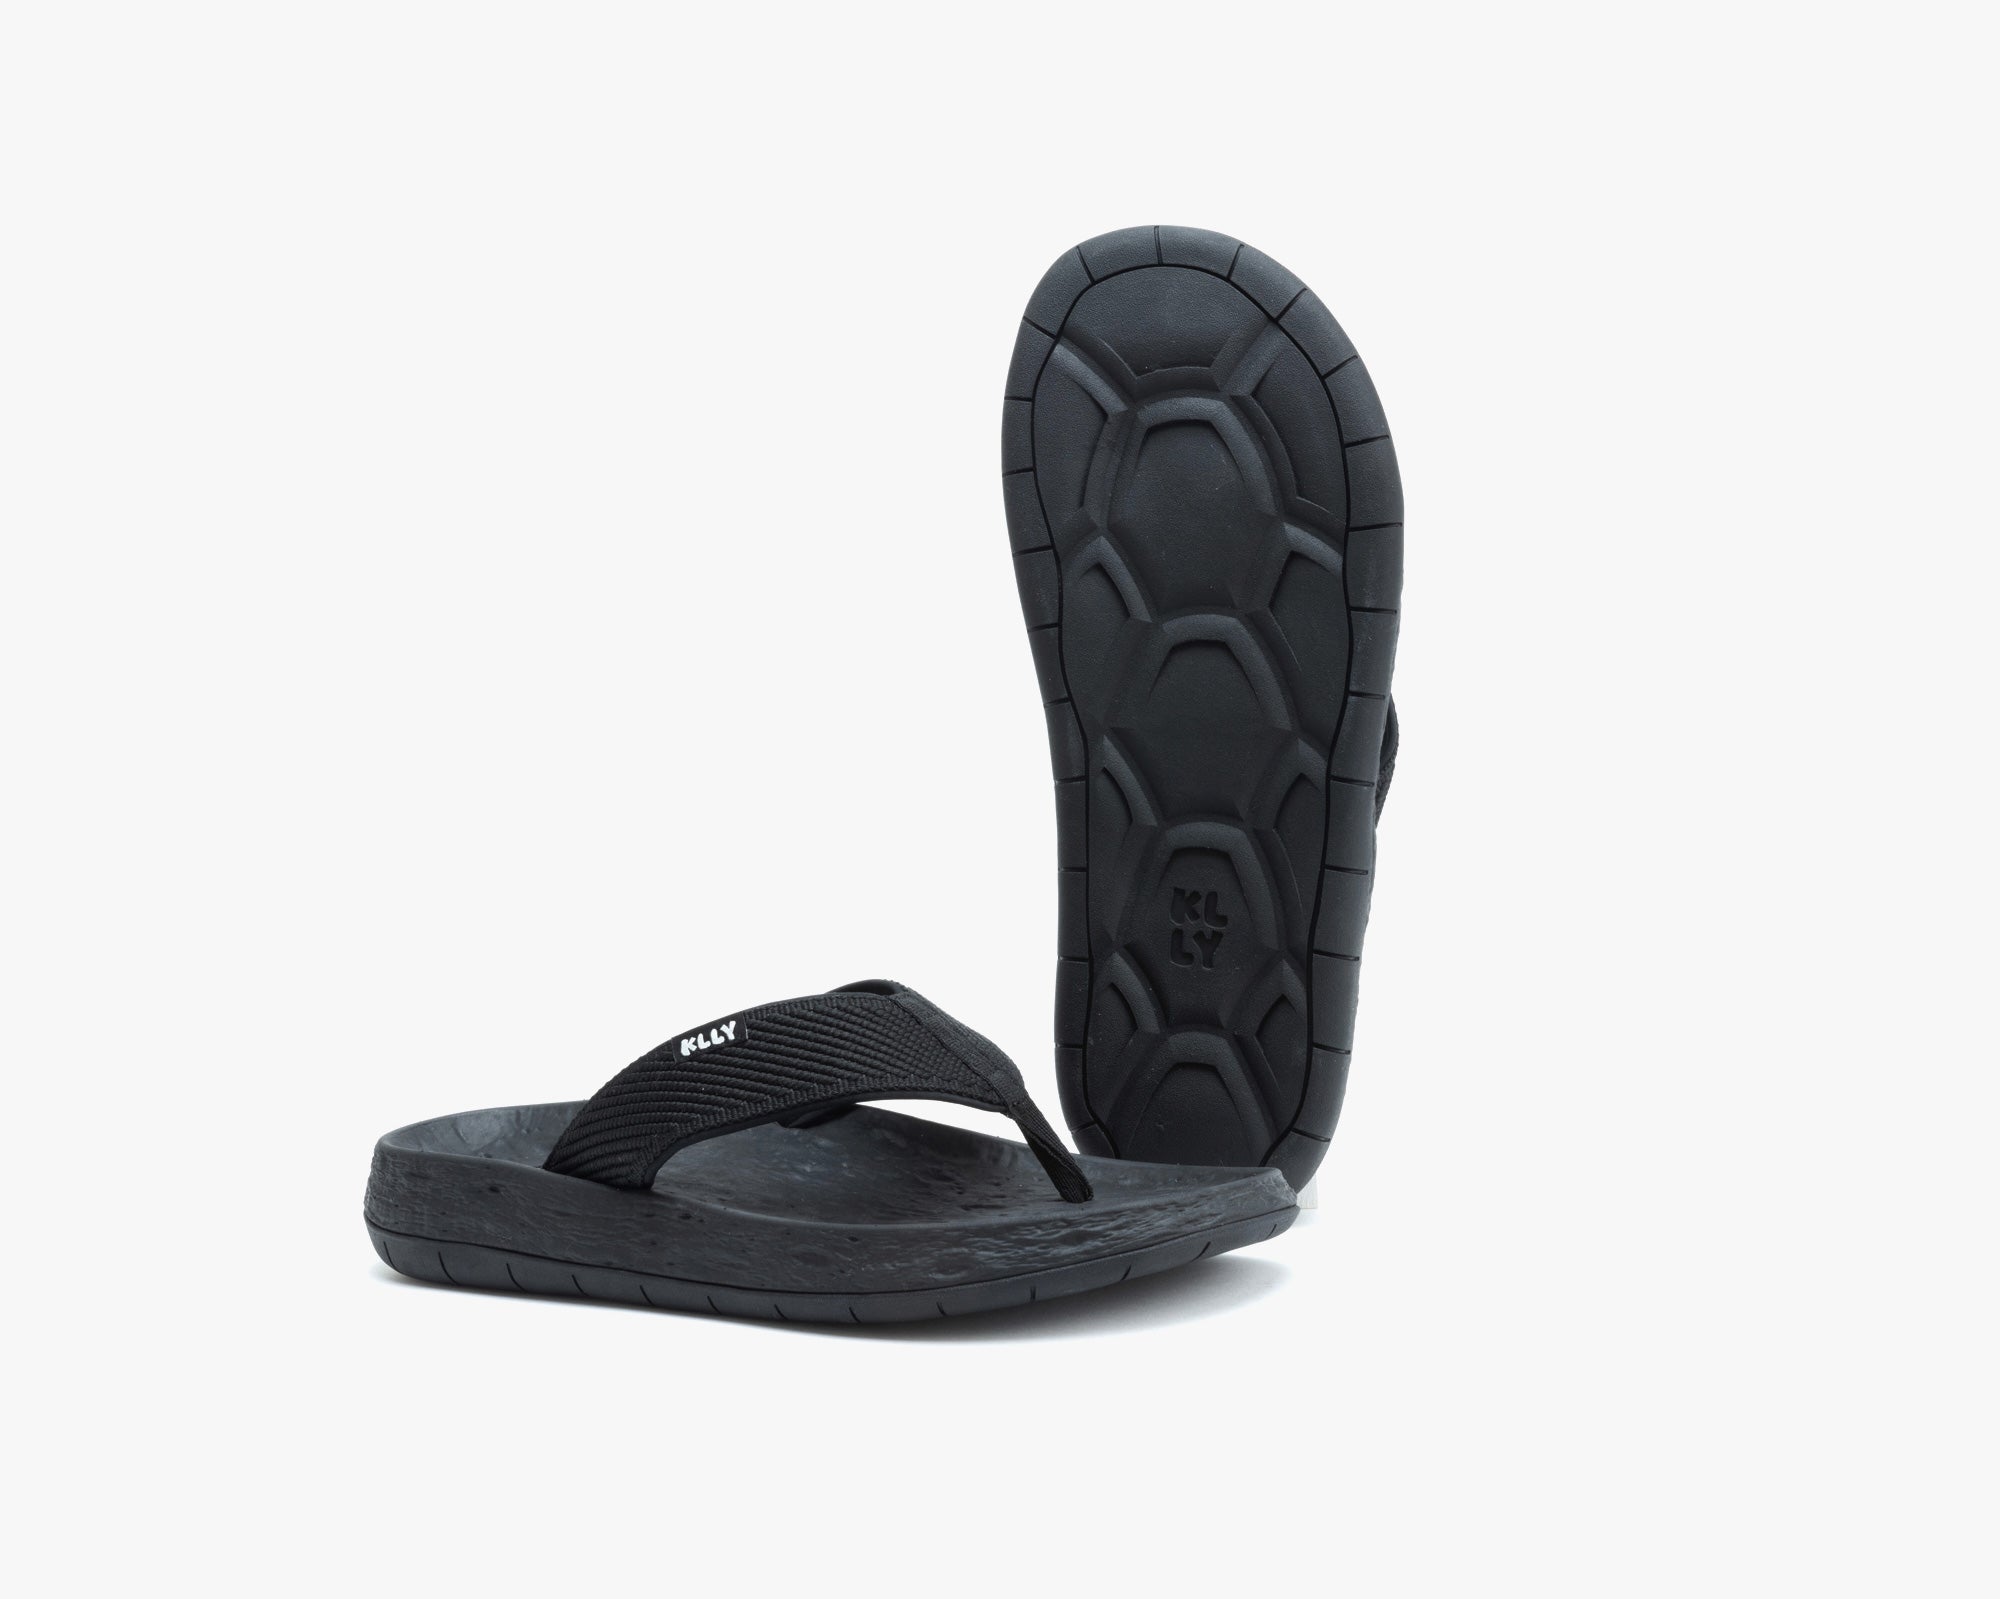 Men’s slippers - klly sandals new moon?